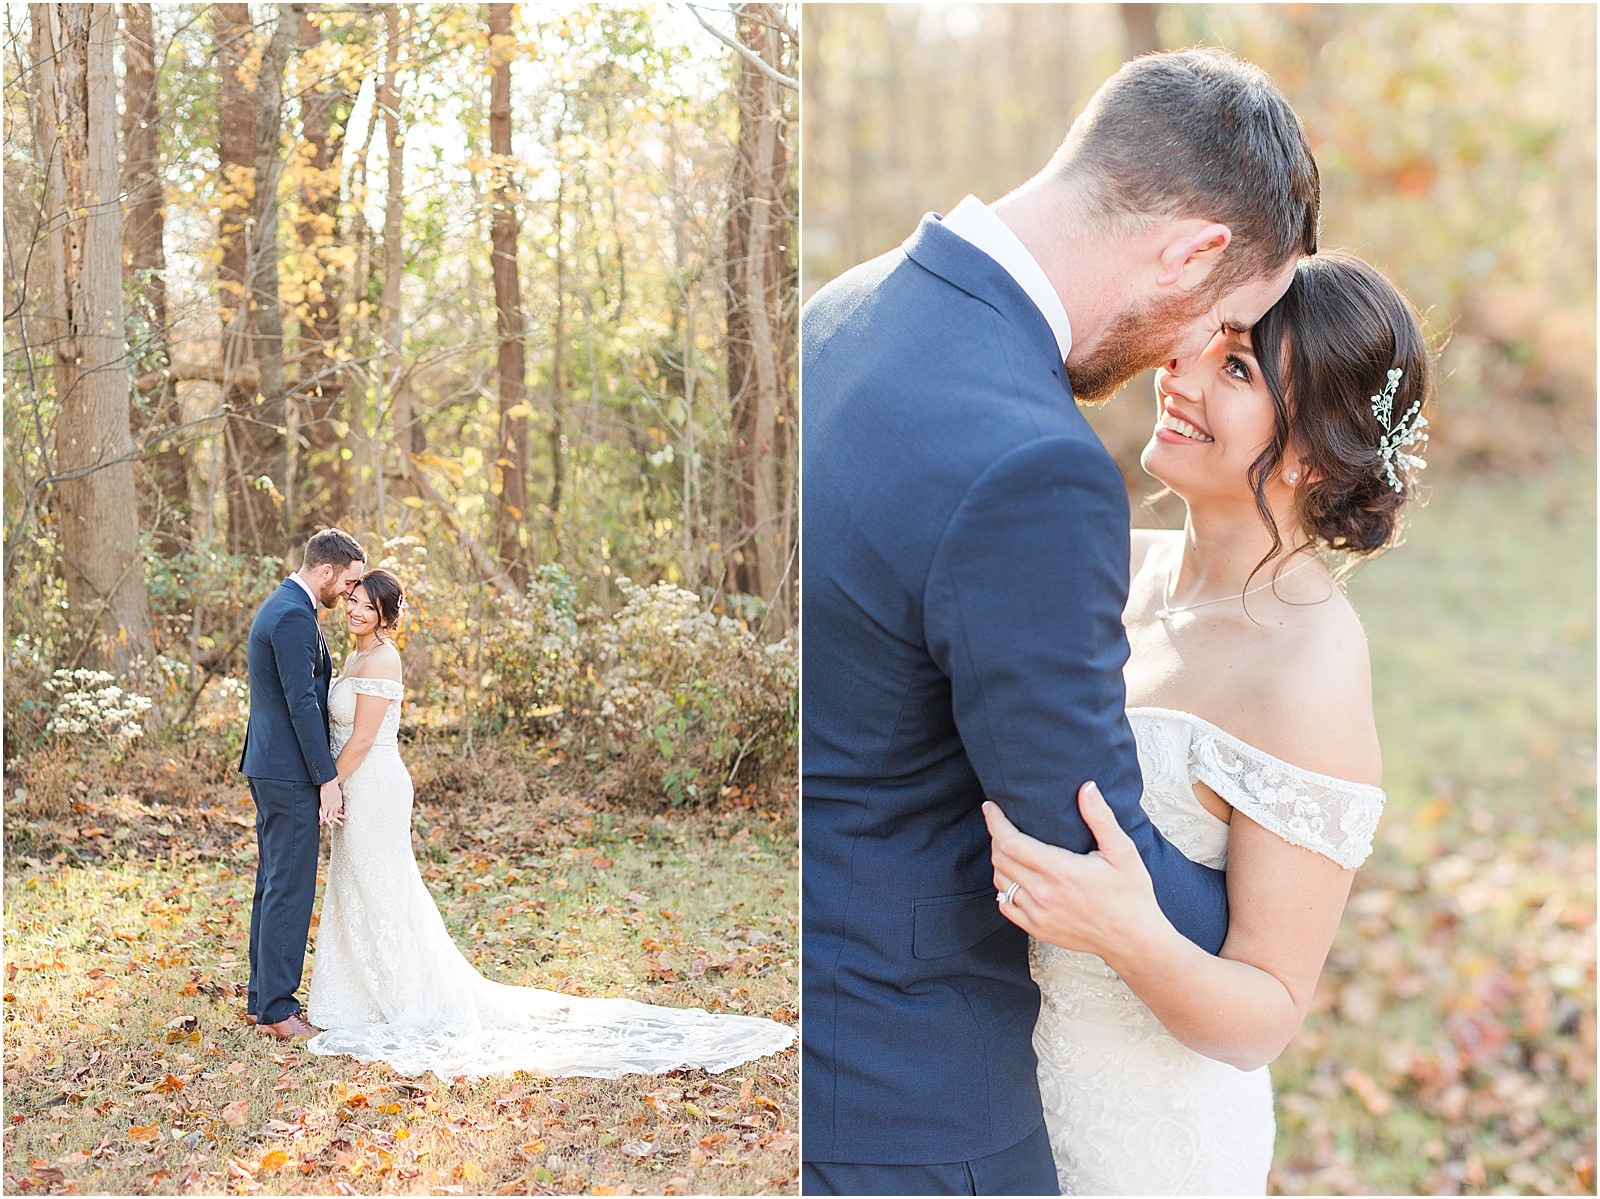 Walker and Alyssa's intimate fall wedding in Southern Indiana. | Wedding Photography | The Corner House Wedding | Southern Indiana Wedding | #fallwedding #intimatewedding | 033.jpg